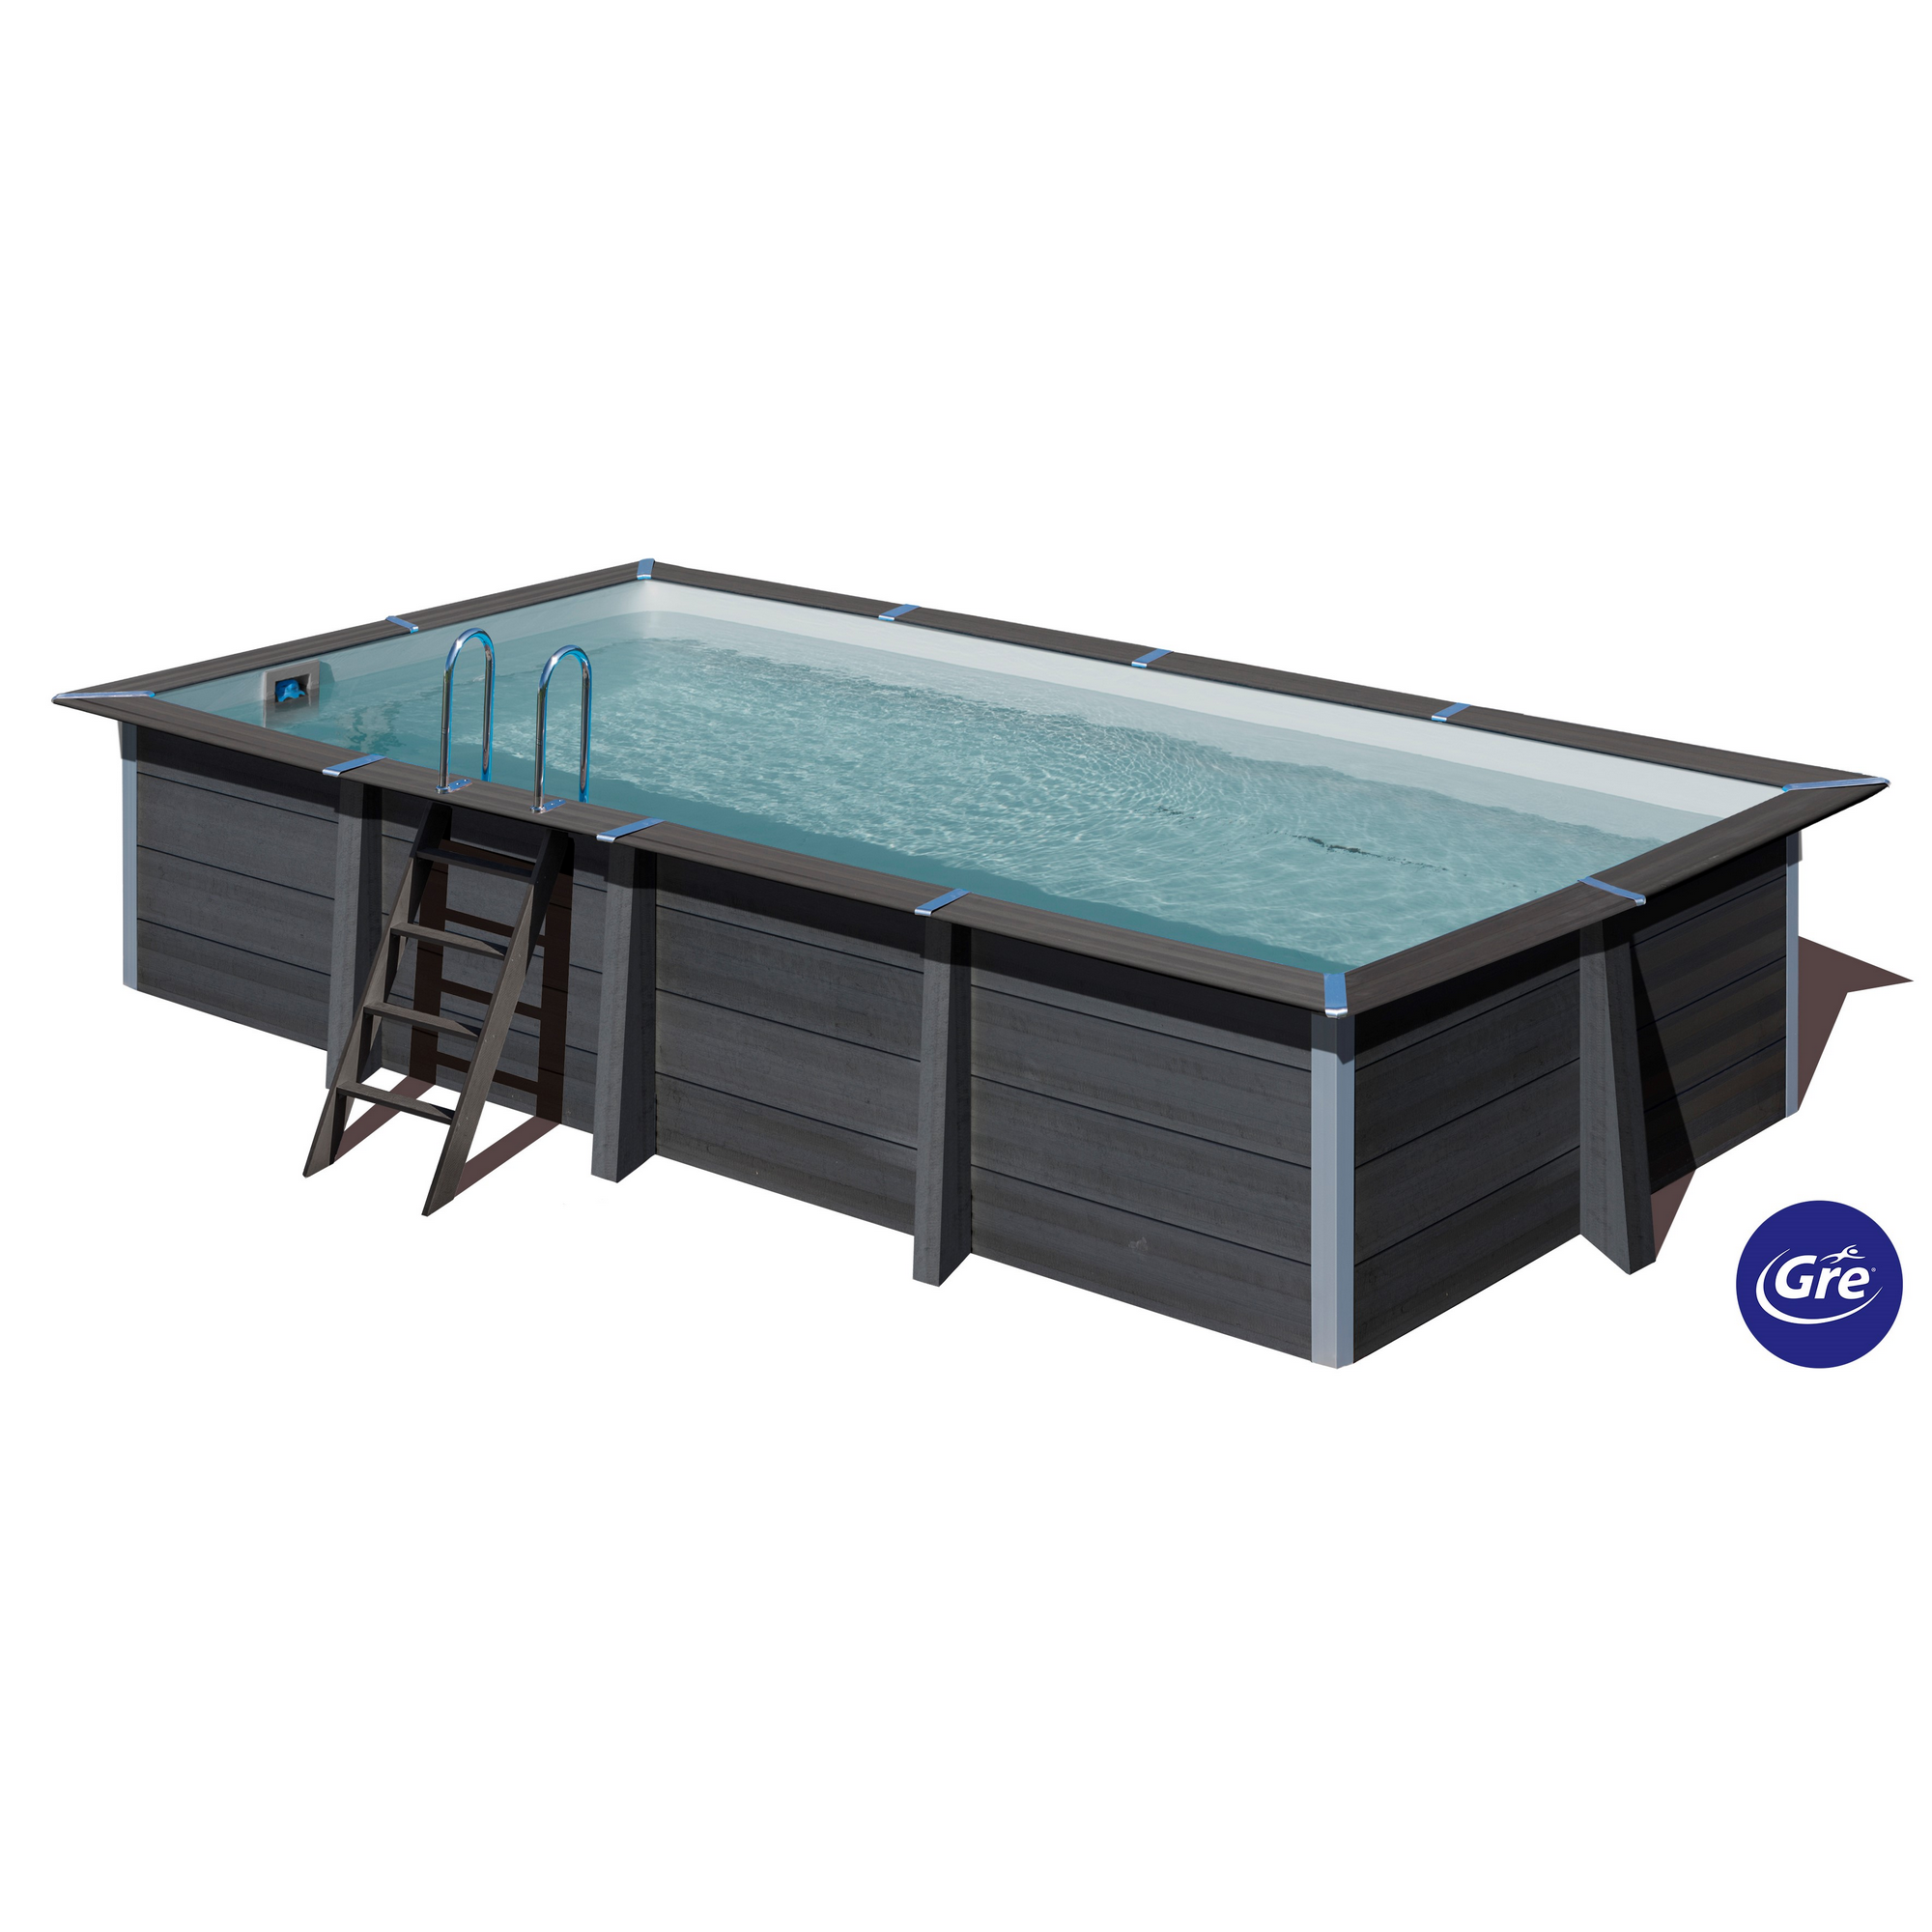 Composite Pool-Set 'Avantgarde' 326 x 124 x 606 cm mit Sandfilter und Trittleiter + product picture